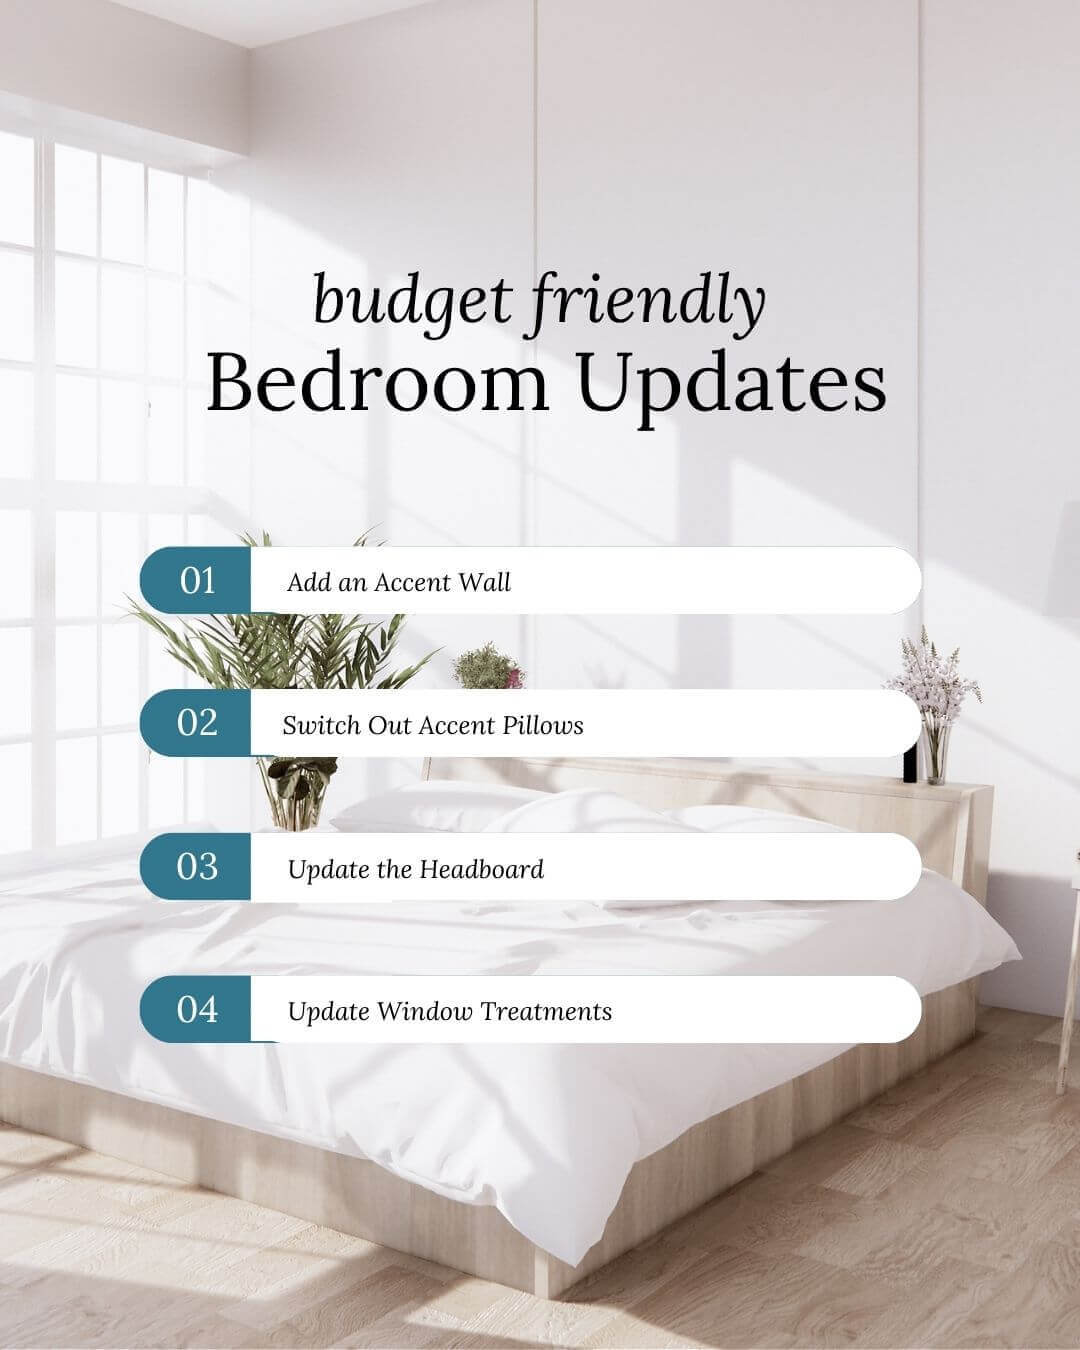 social media for realtors bedroom buget friendly updates